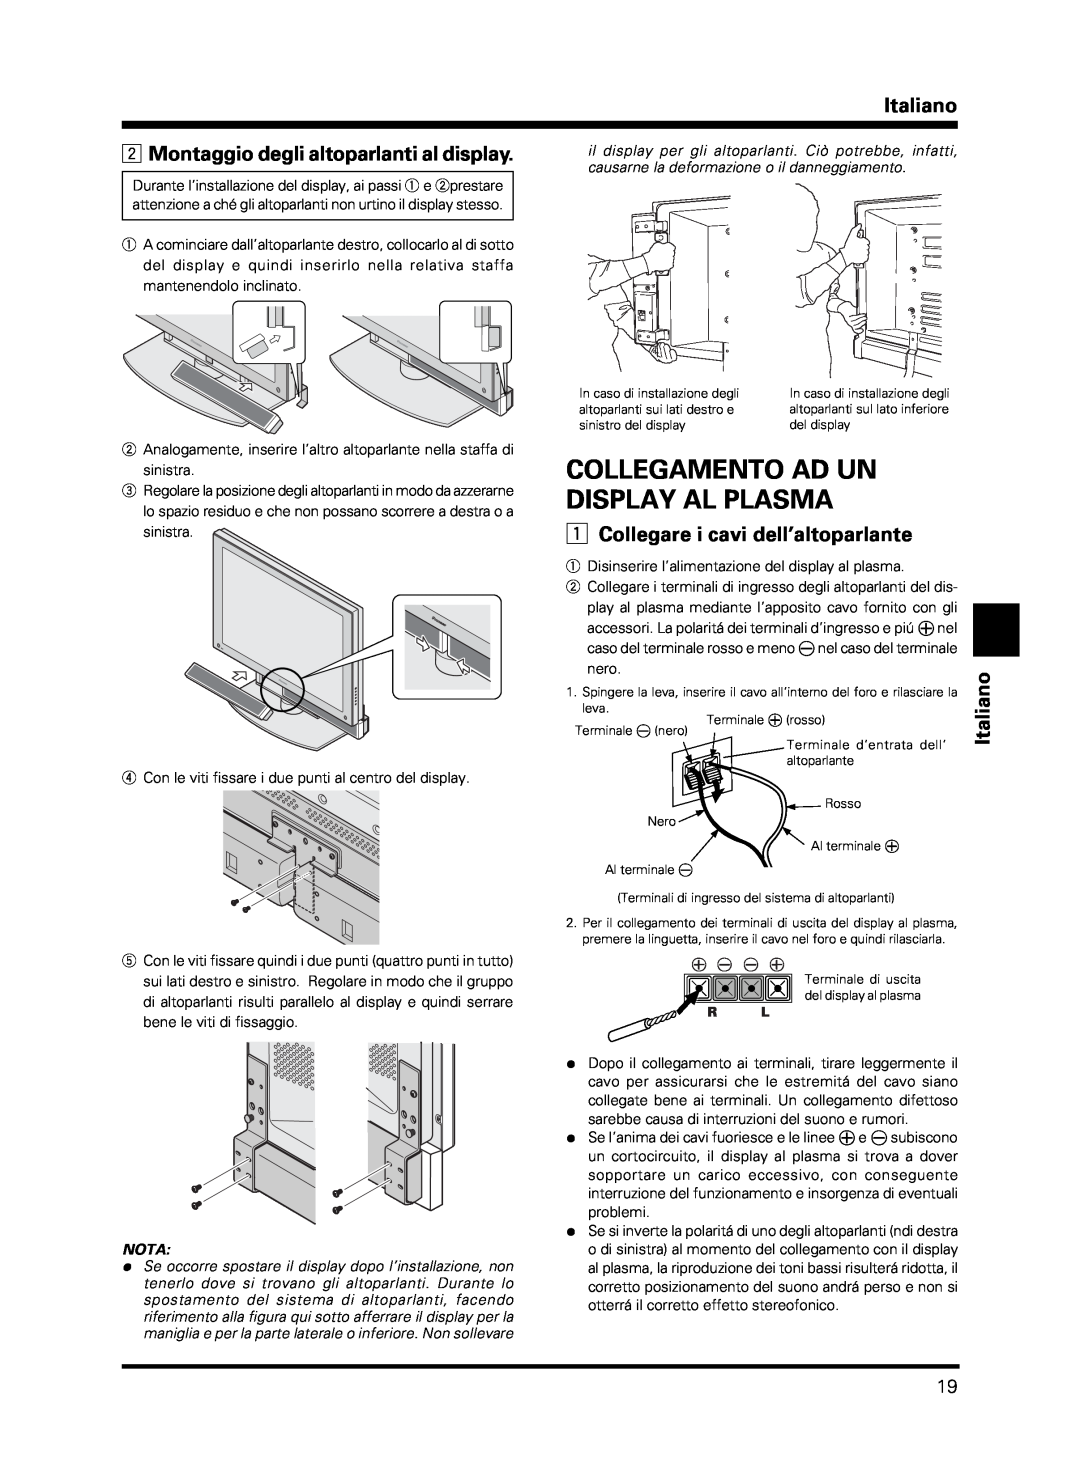 Pioneer PDP-S13-LR manual Collegamento Ad Un Display Al Plasma, Montaggio degli altoparlanti al display, Italiano, Nota 